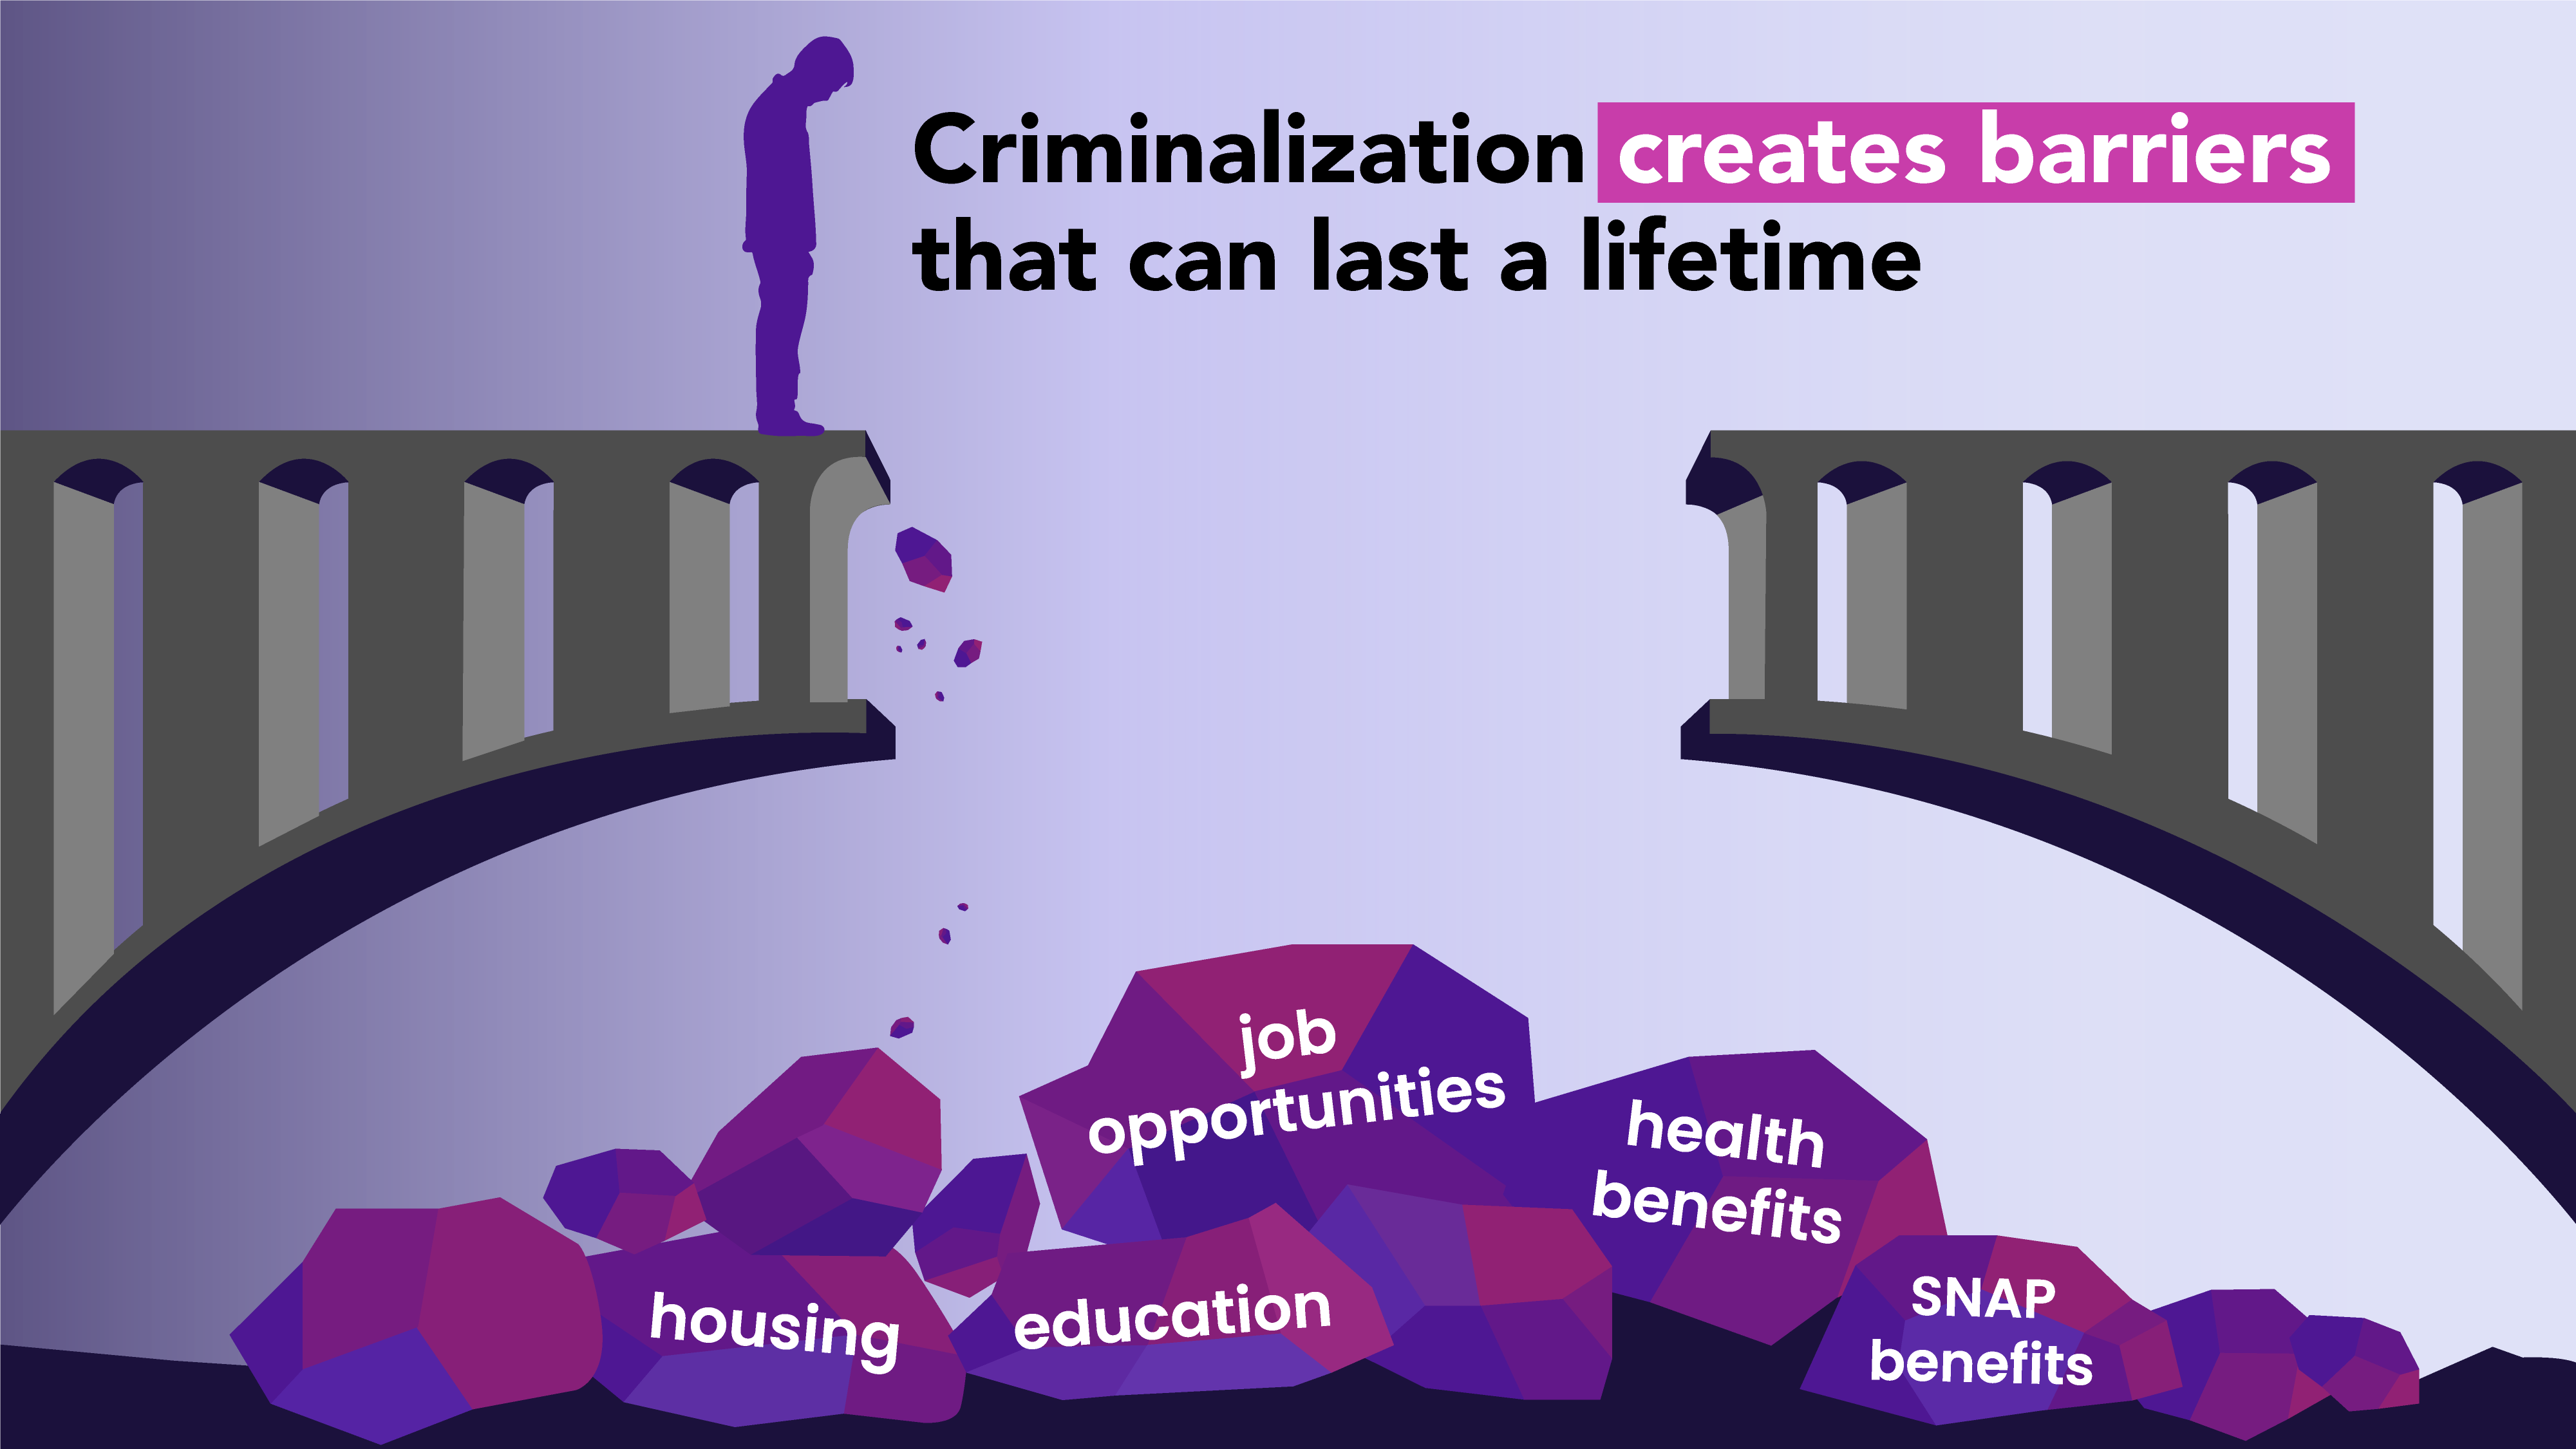 Criminalization creates barriers that can last a lifetime